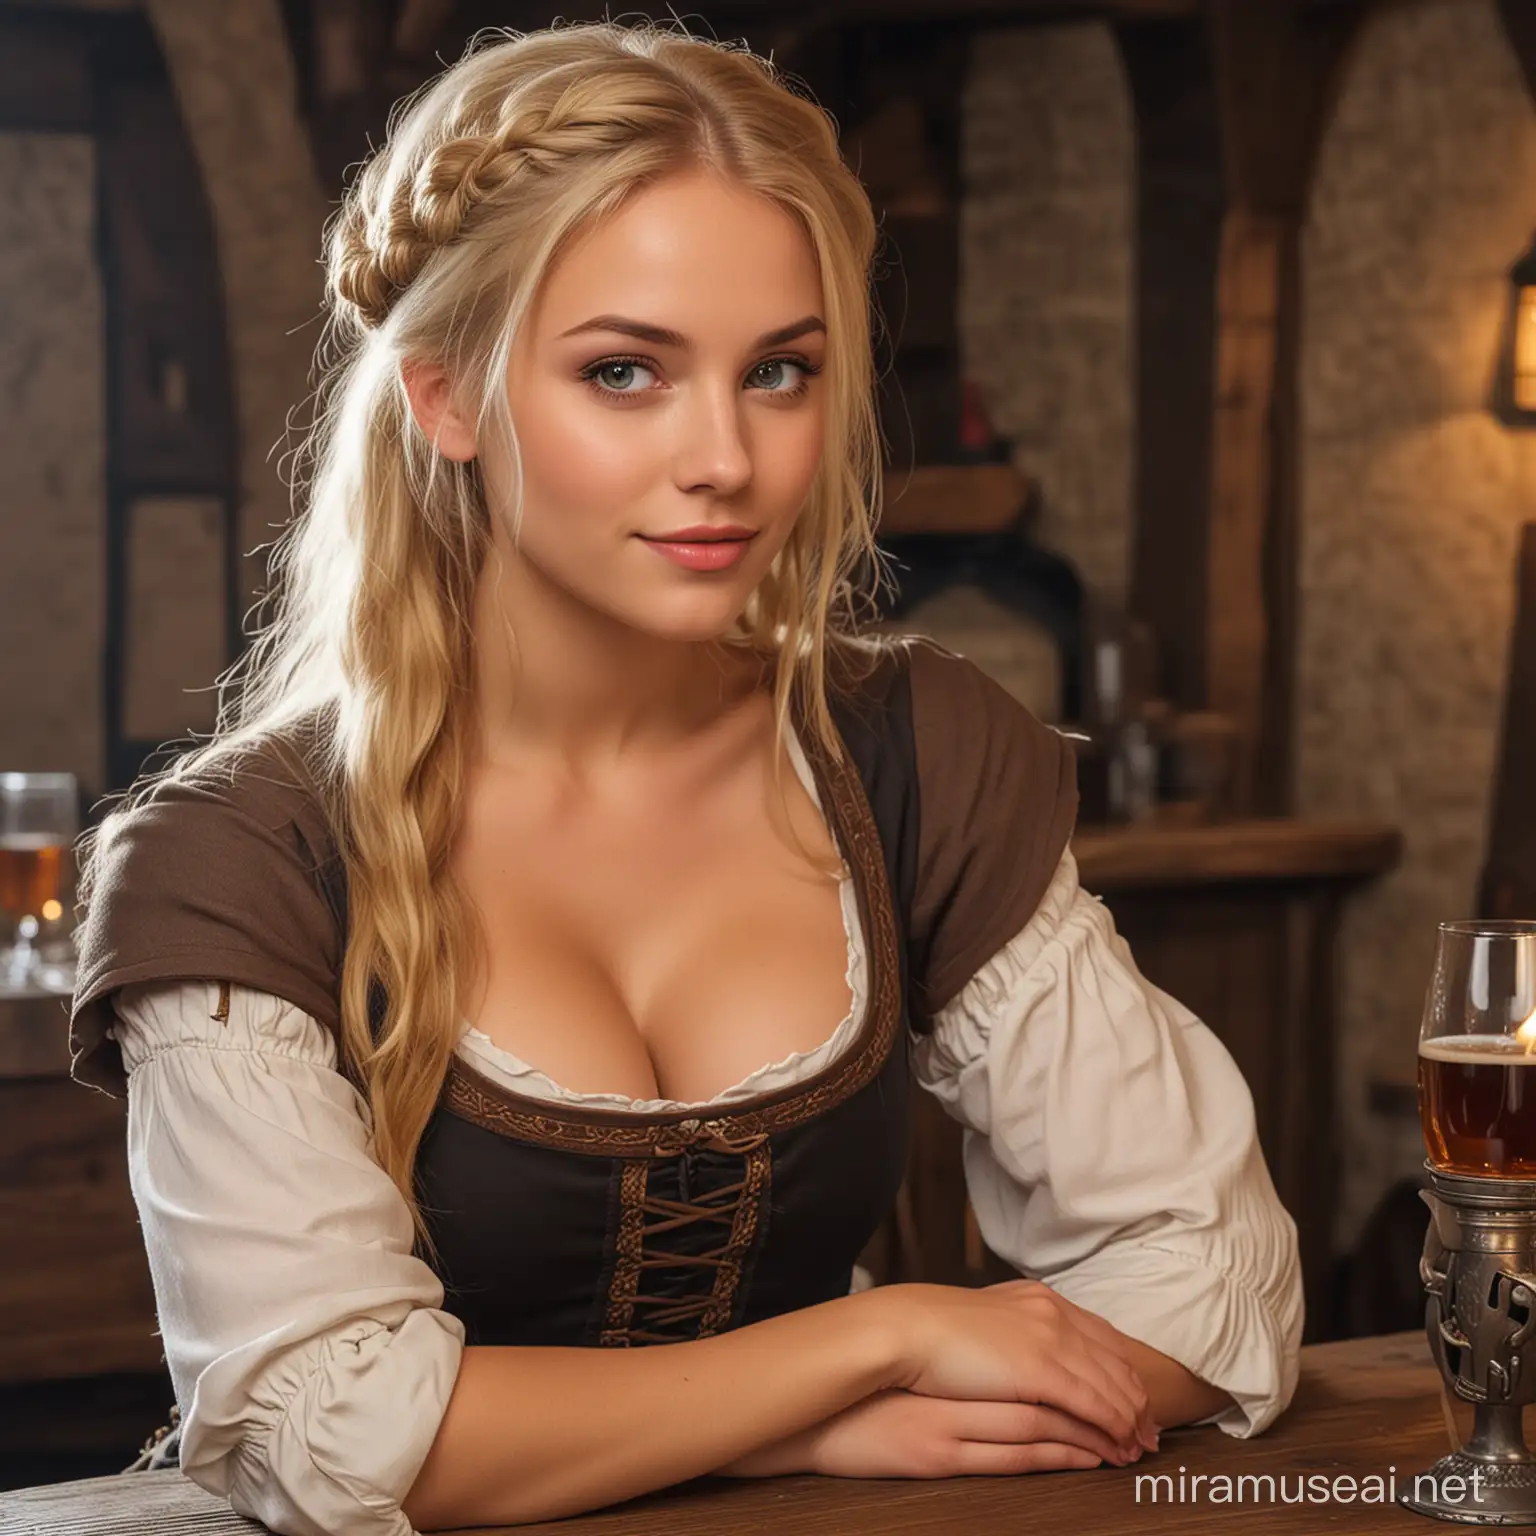 Beautiful blonde medieval tavern girl